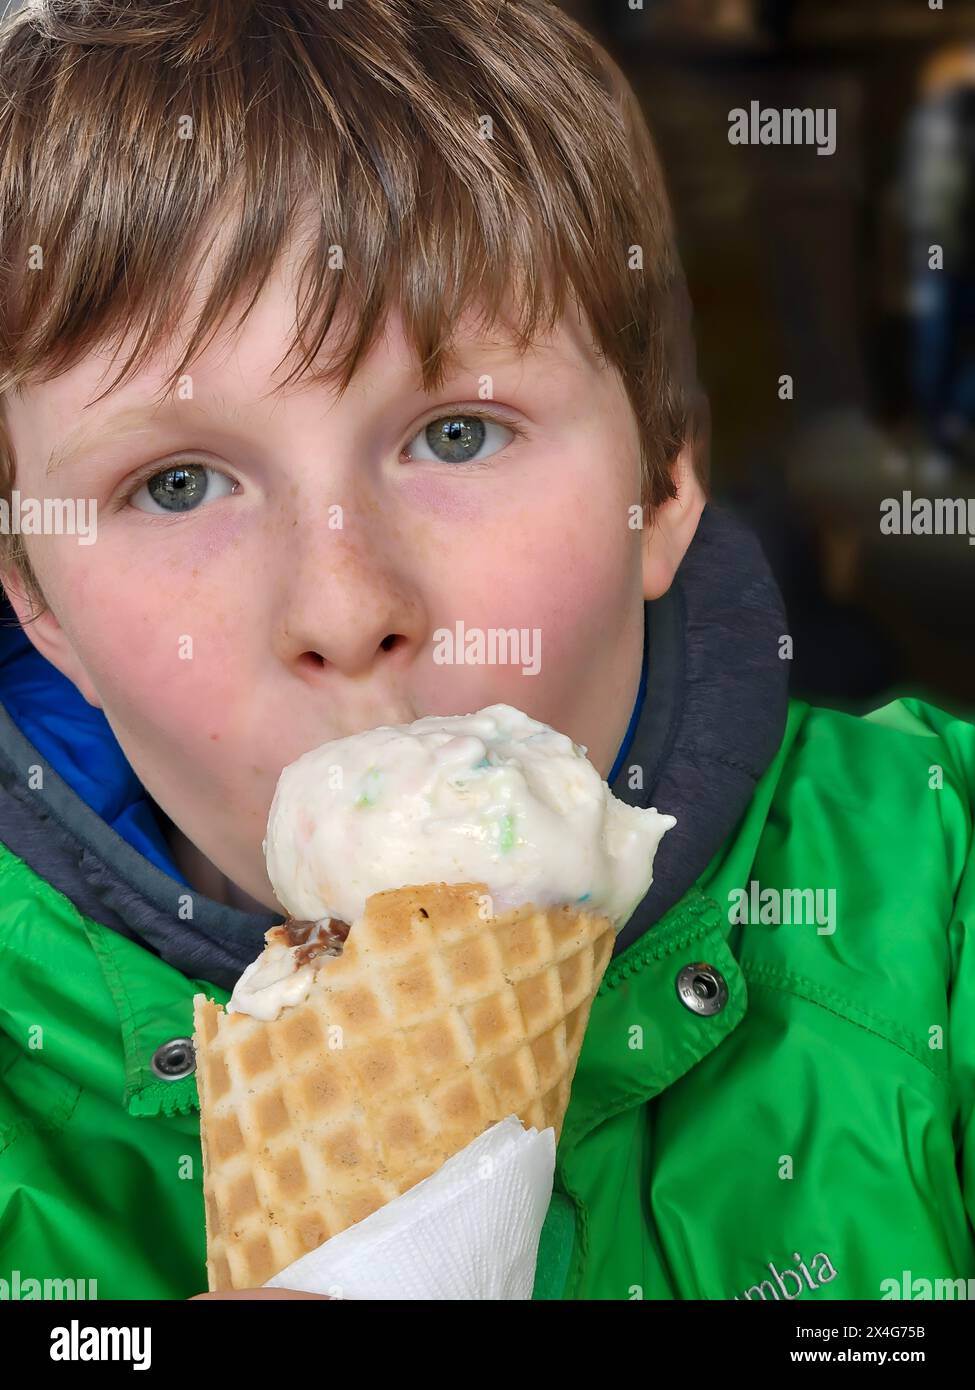 Boy with bright eyes enjoys a delicious ice cream cone Stock Photo